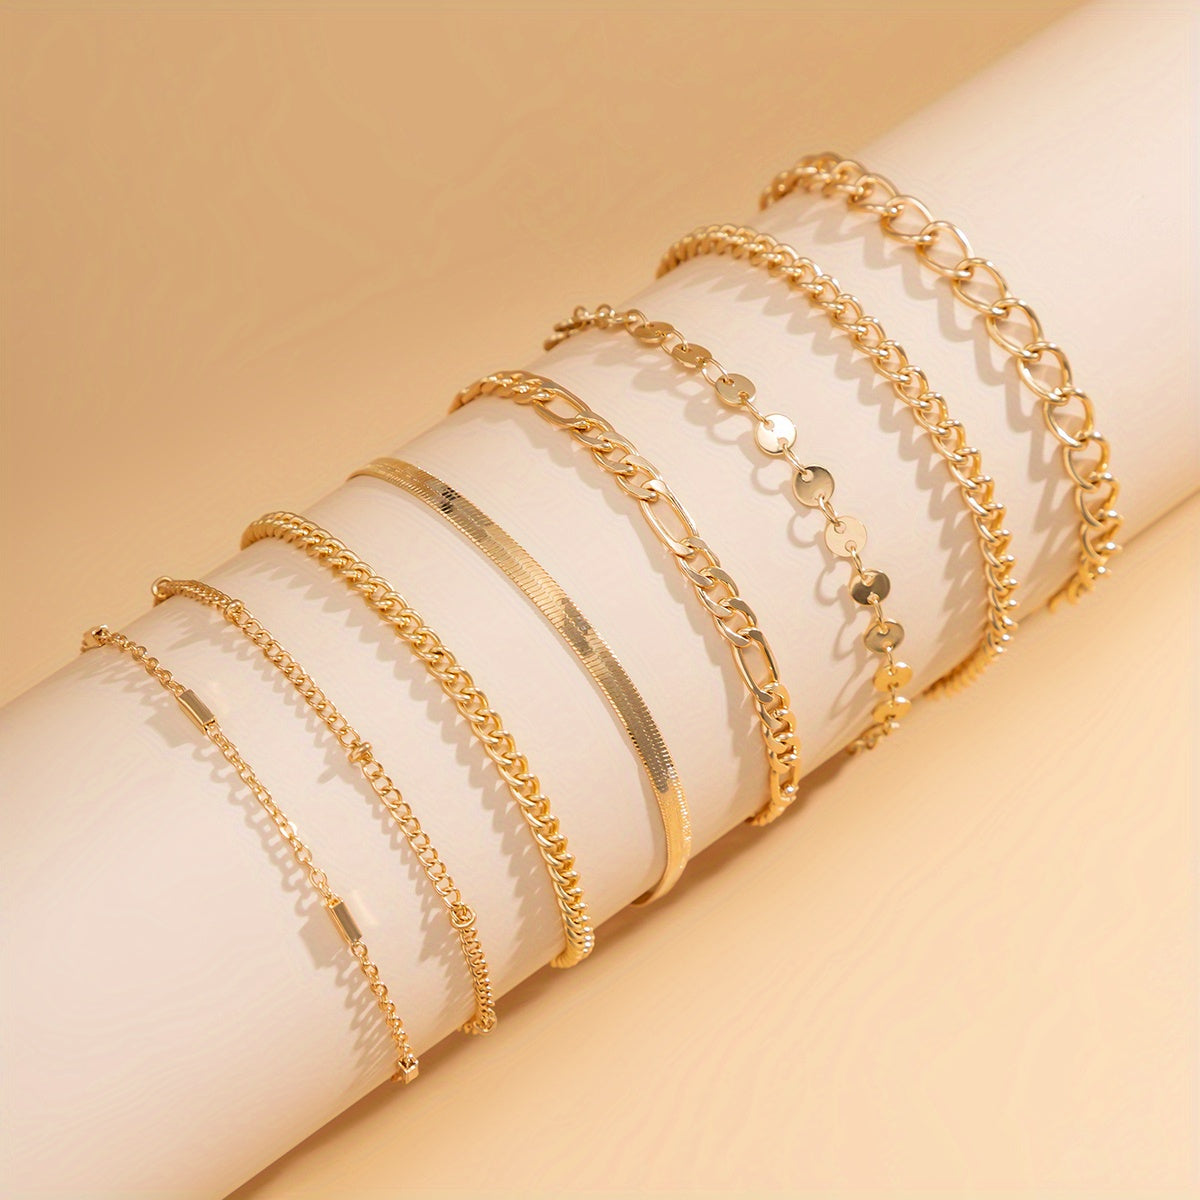 8-Piece Geometric Chain Bracelet Set - Stylish Adjustable Jewelry Accessories